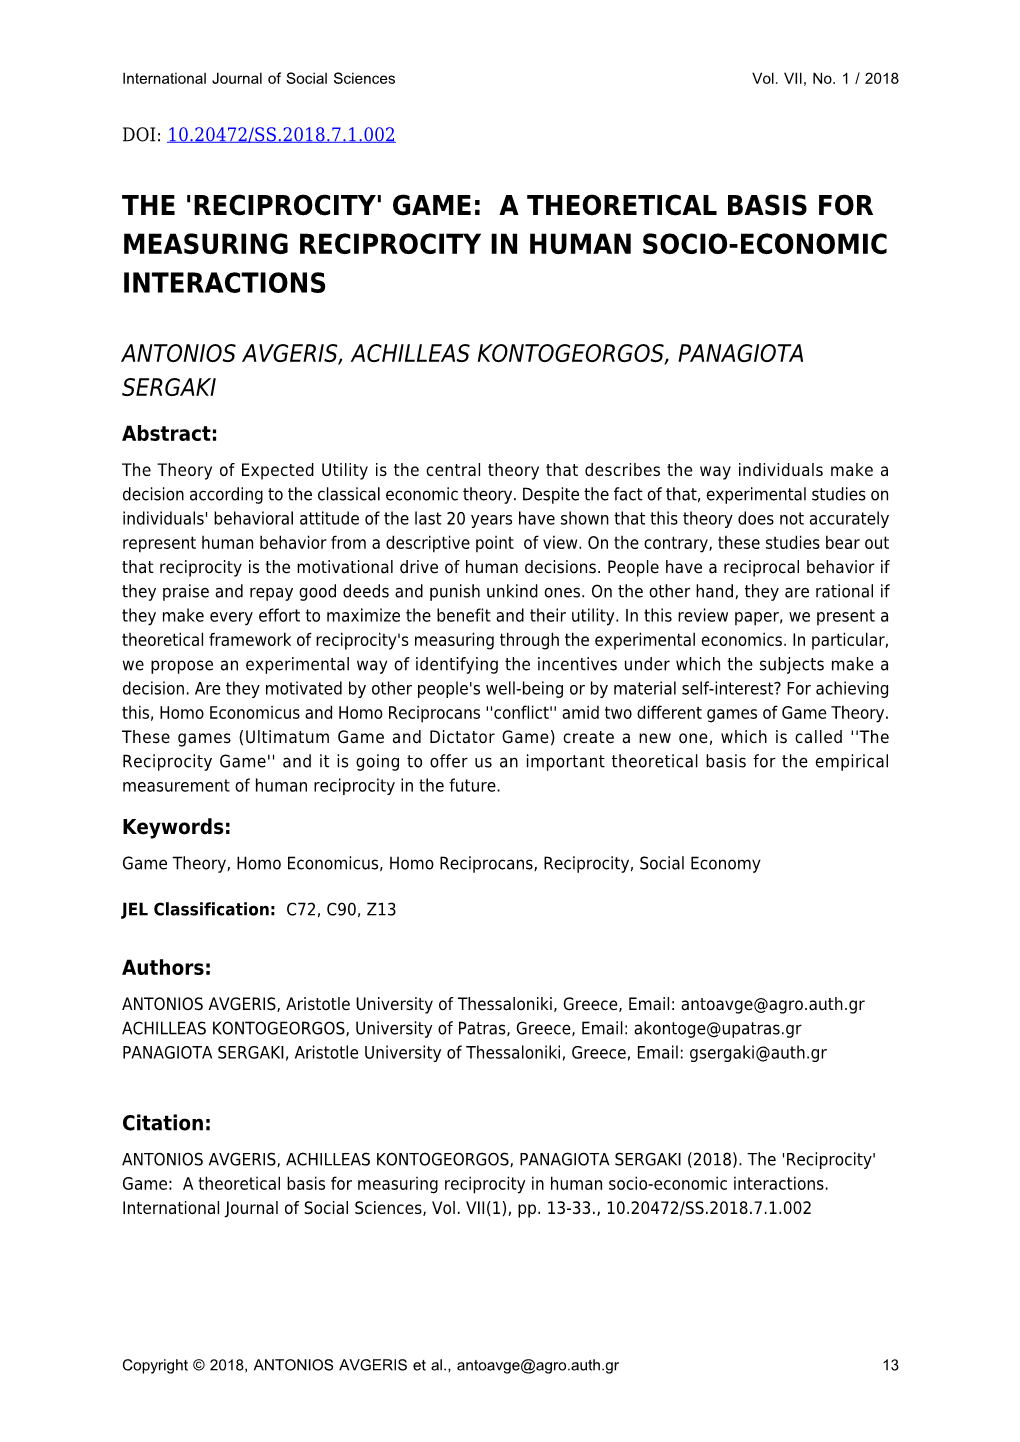 Game: a Theoretical Basis for Measuring Reciprocity in Human Socio-Economic Interactions